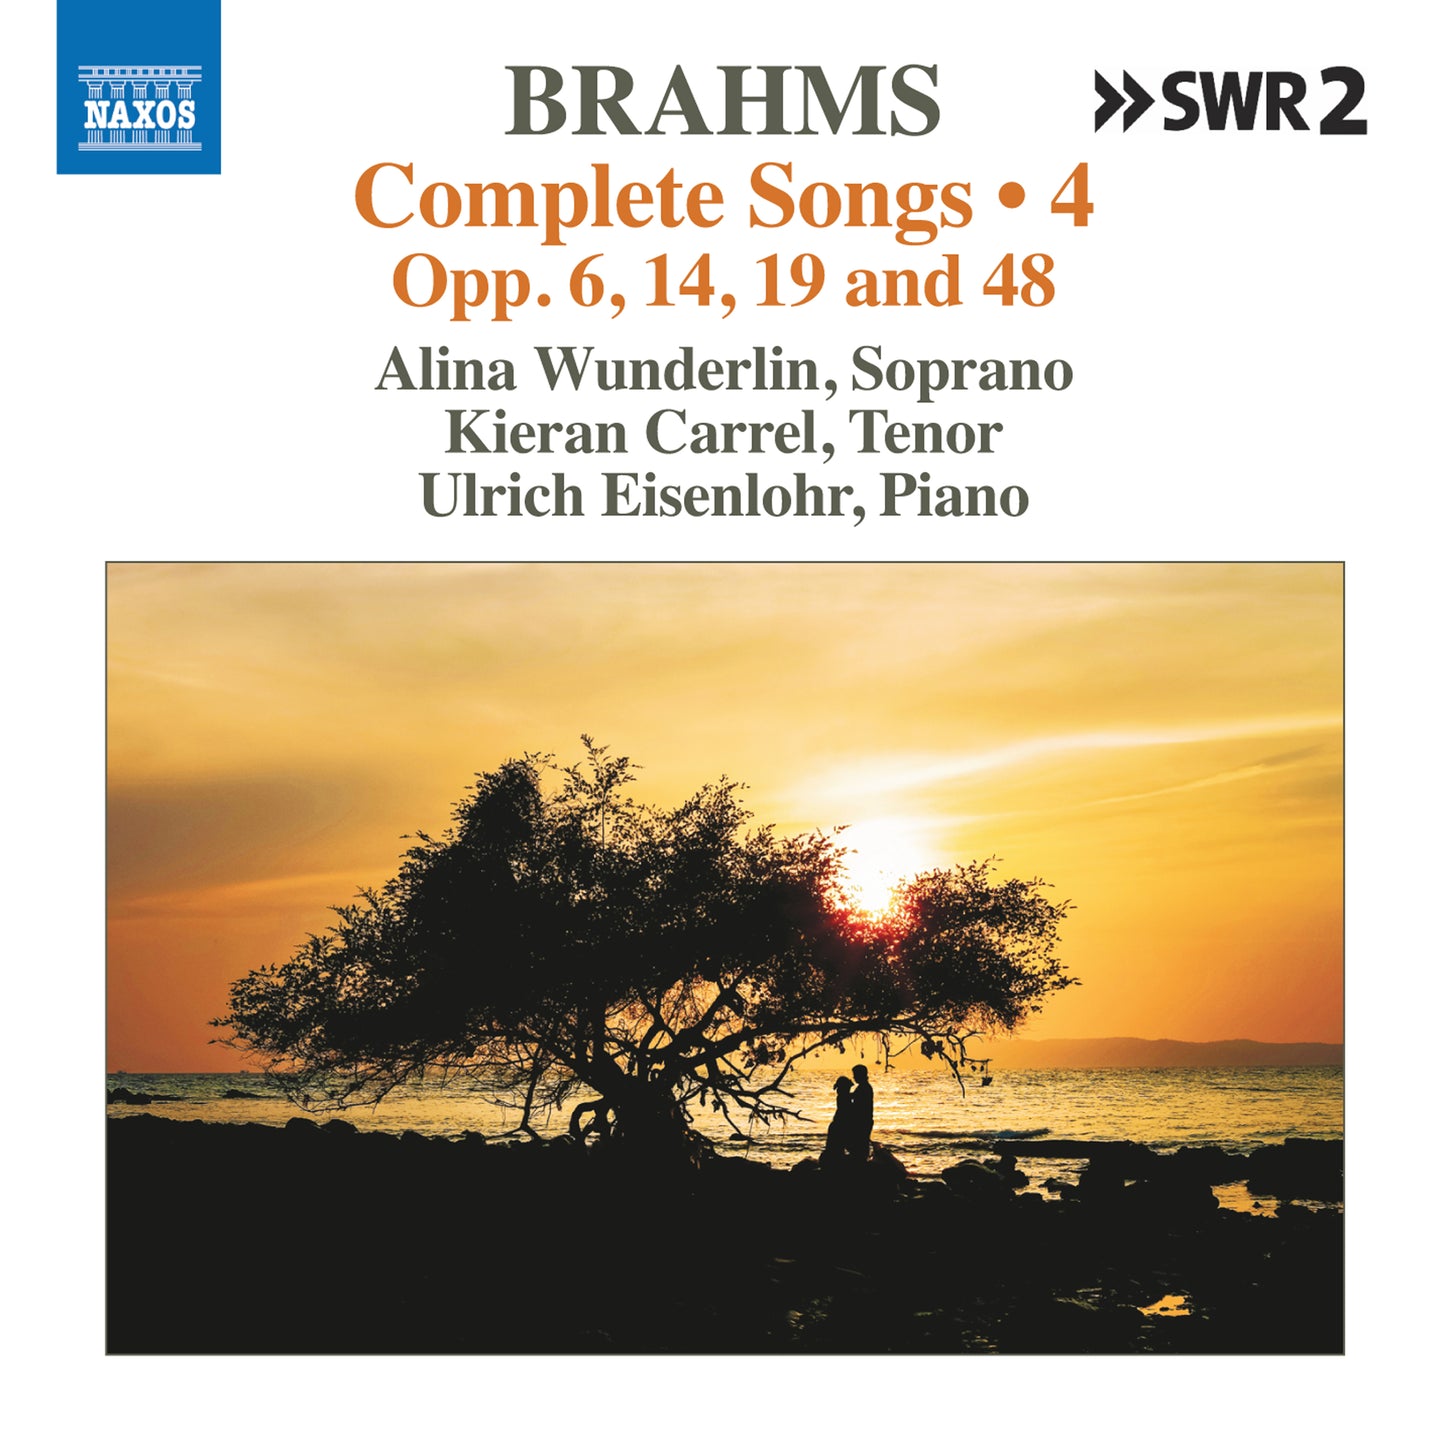 Brahms: Complete Songs, Vol. 4 / Alina Wunderlin; Kieran Carrel; Ulrich Eisenhohr